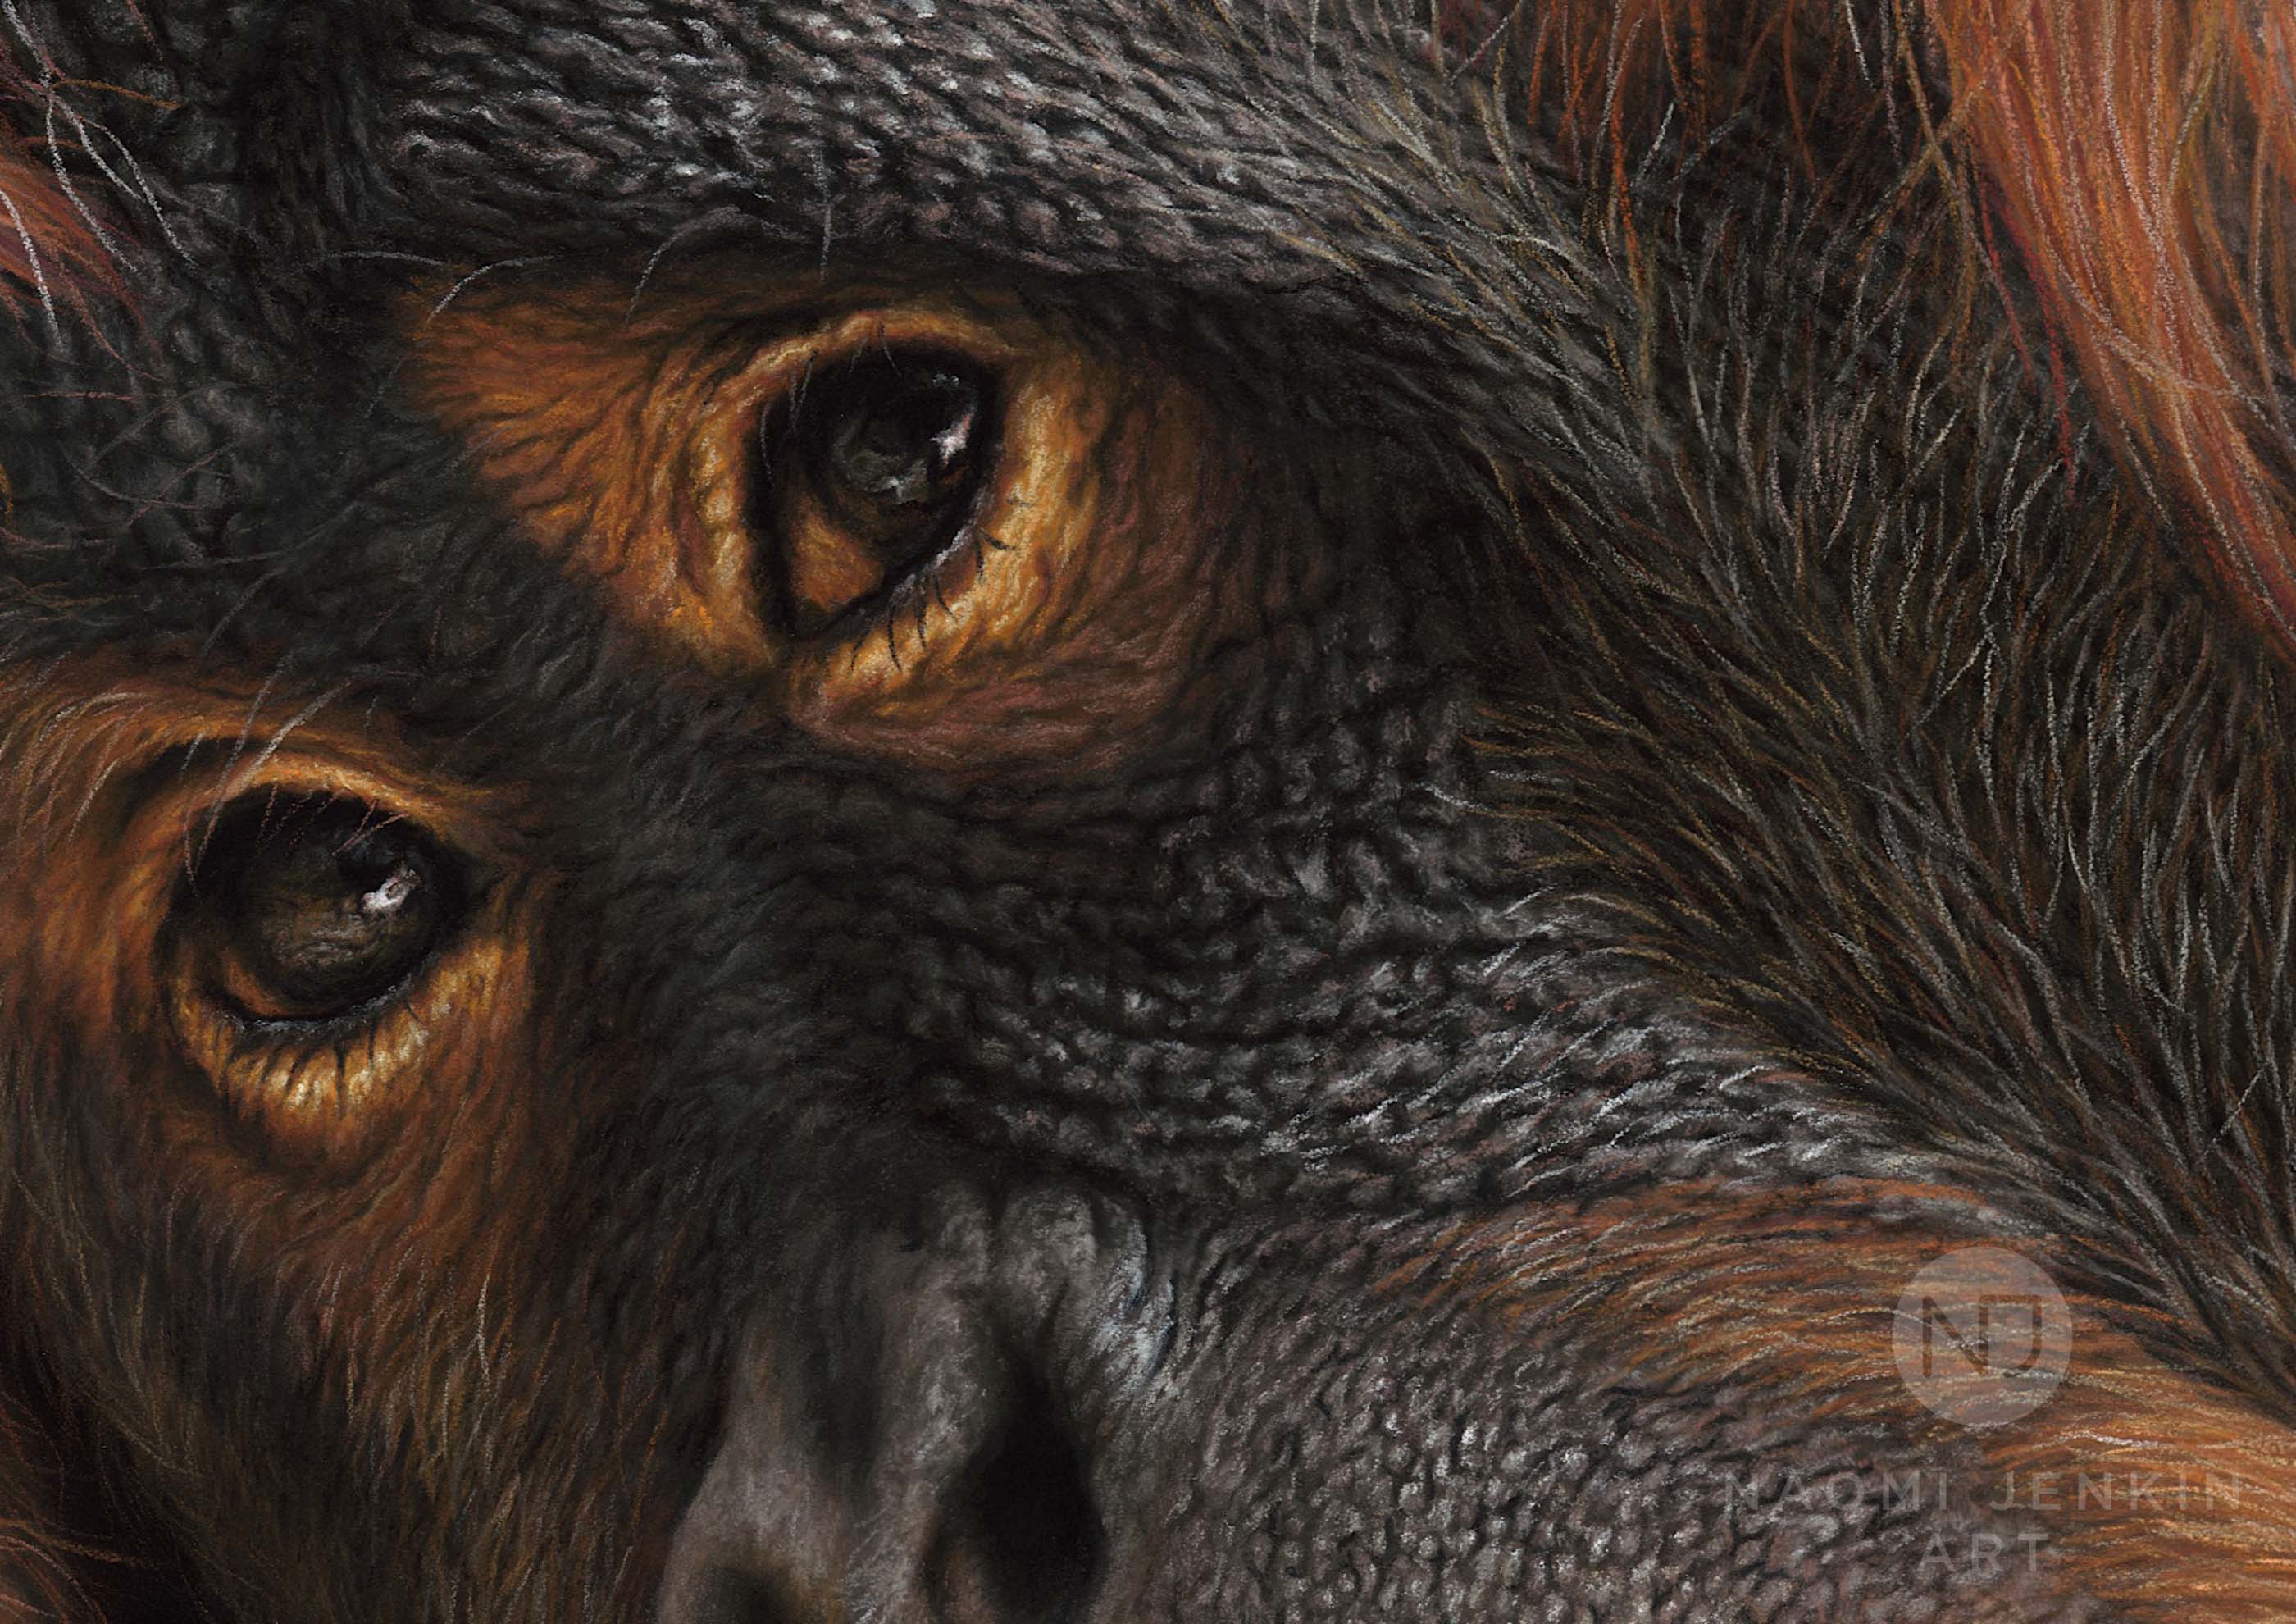 Bornean orangutan art by wildlife artist Naomi Jenkin. 